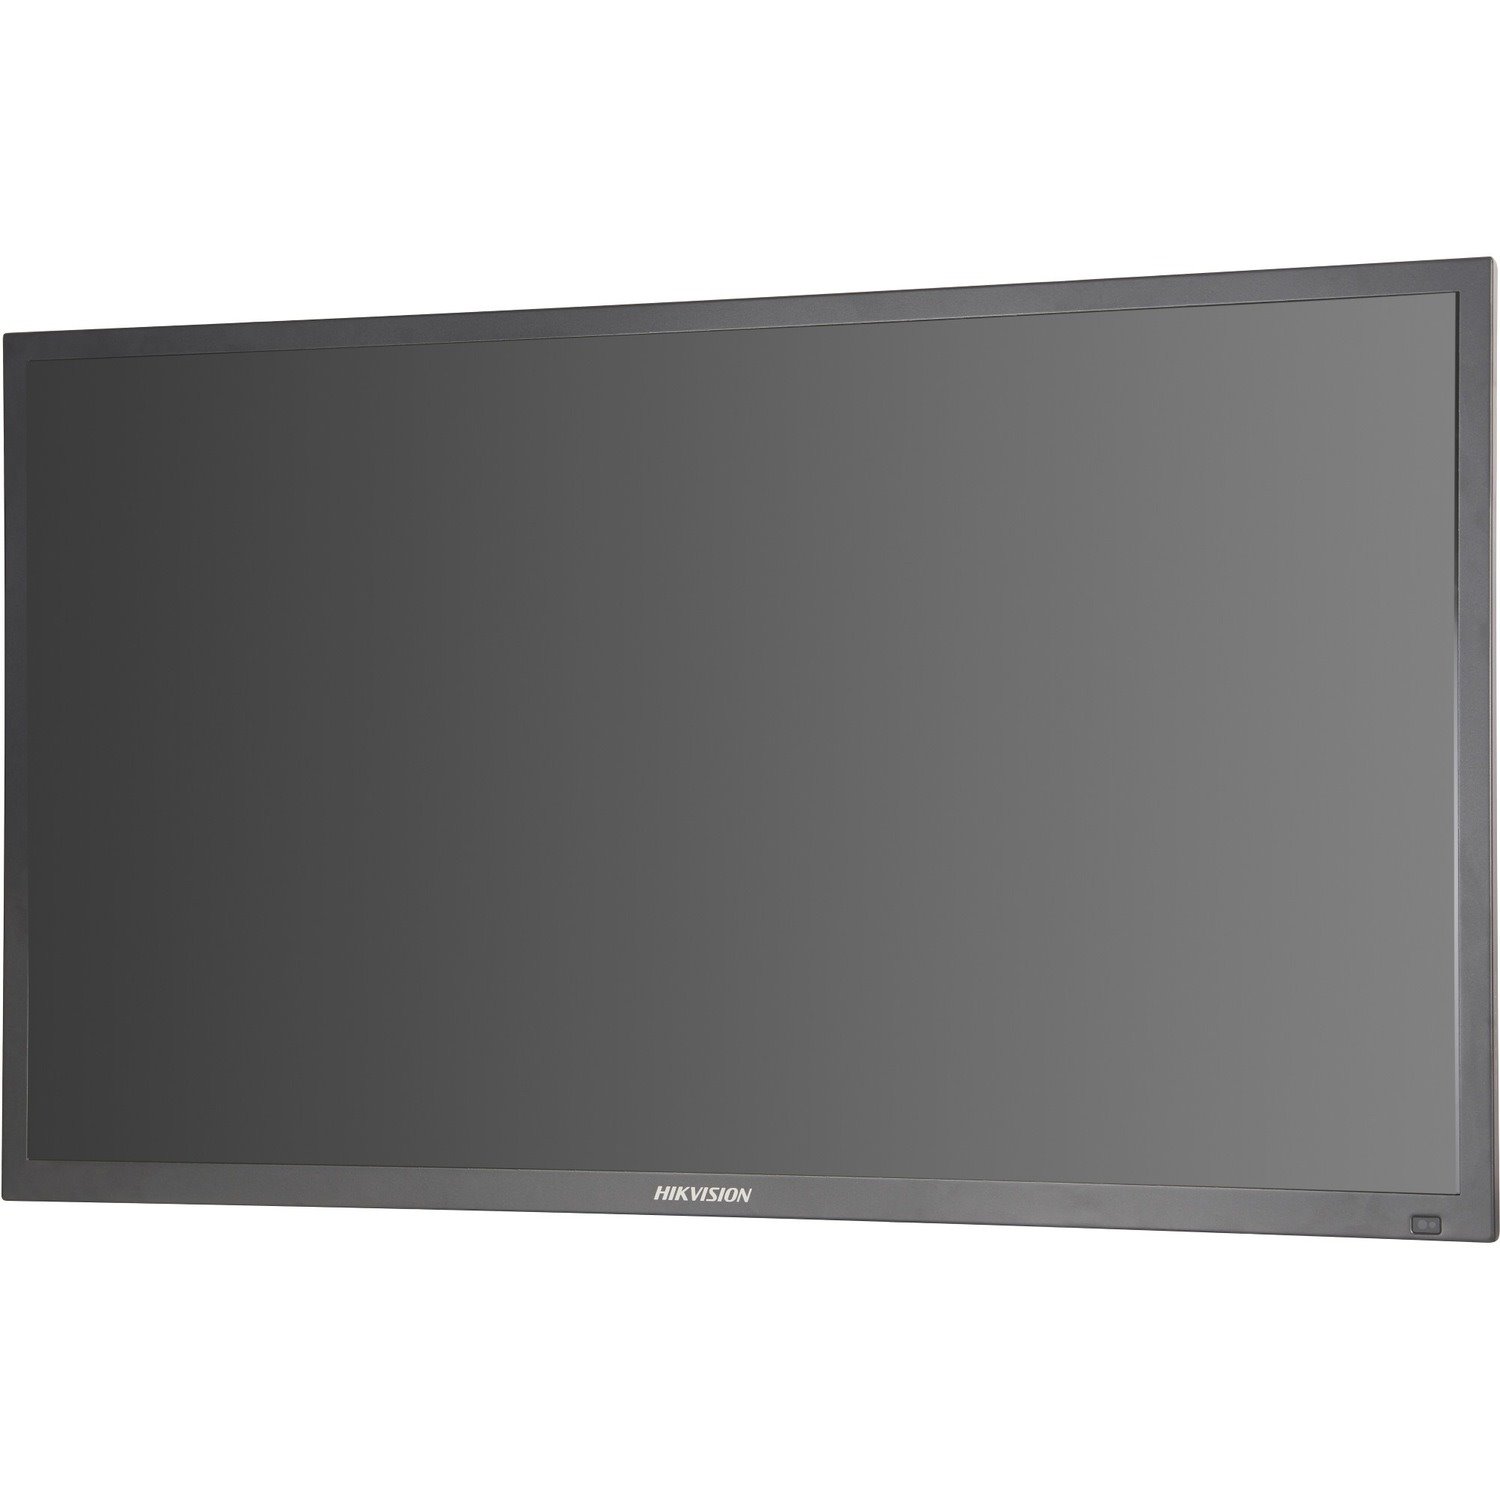 Hikvision DS-D5055UL-B 55" 4K UHD Direct LED LCD Monitor - 16:9 - Black